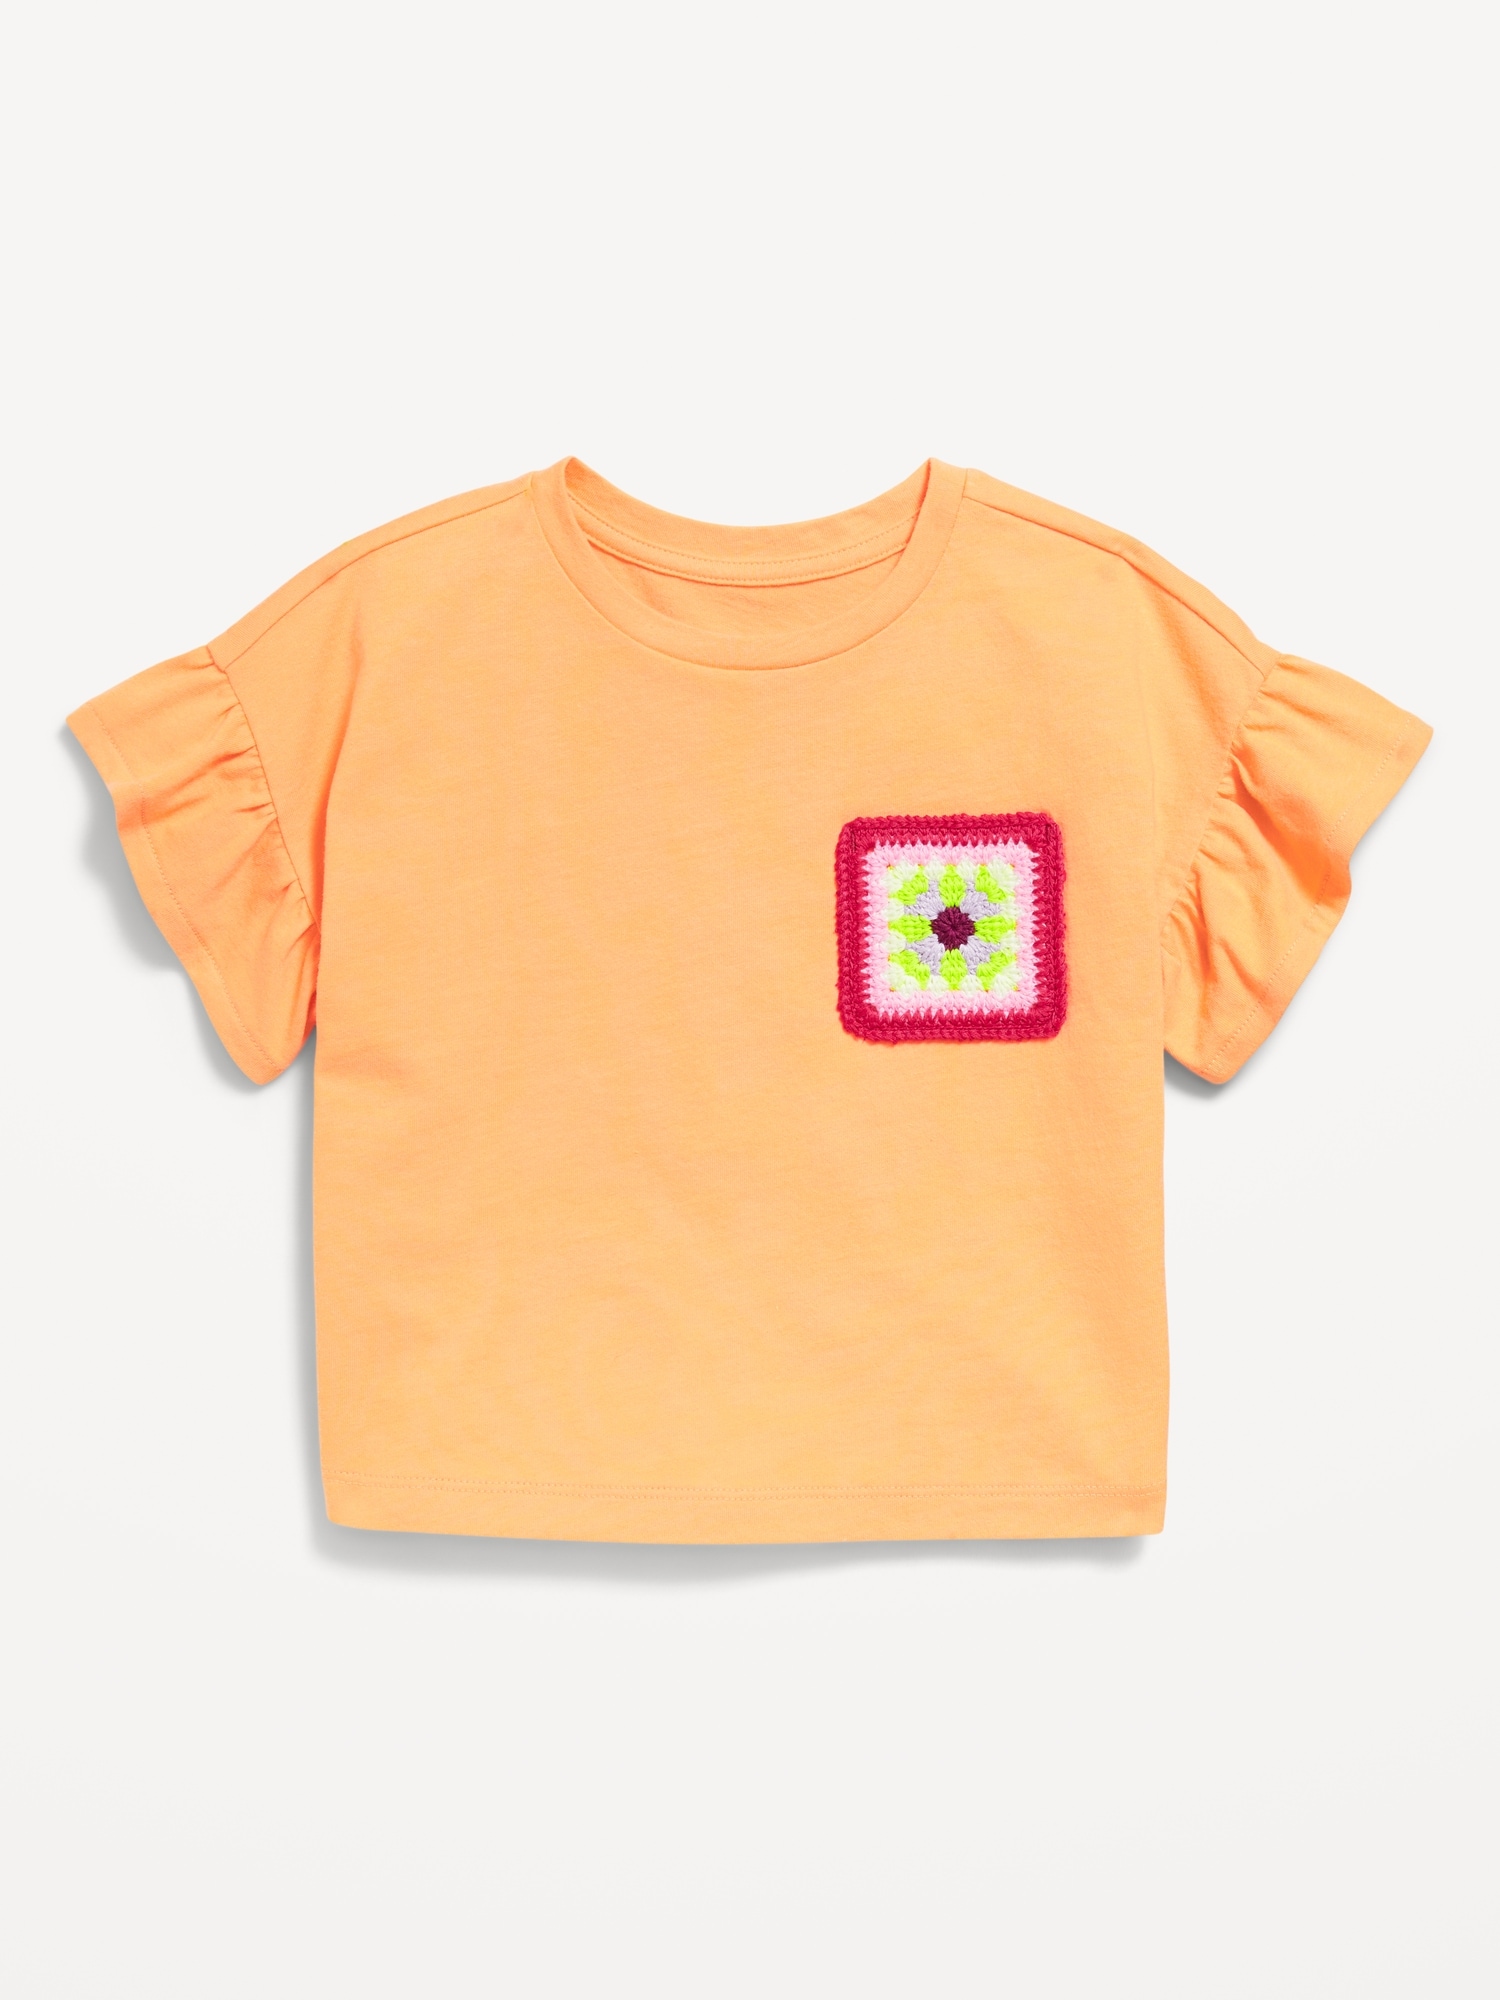 Short-Sleeve Crochet-Knit Graphic Top for Toddler Girls